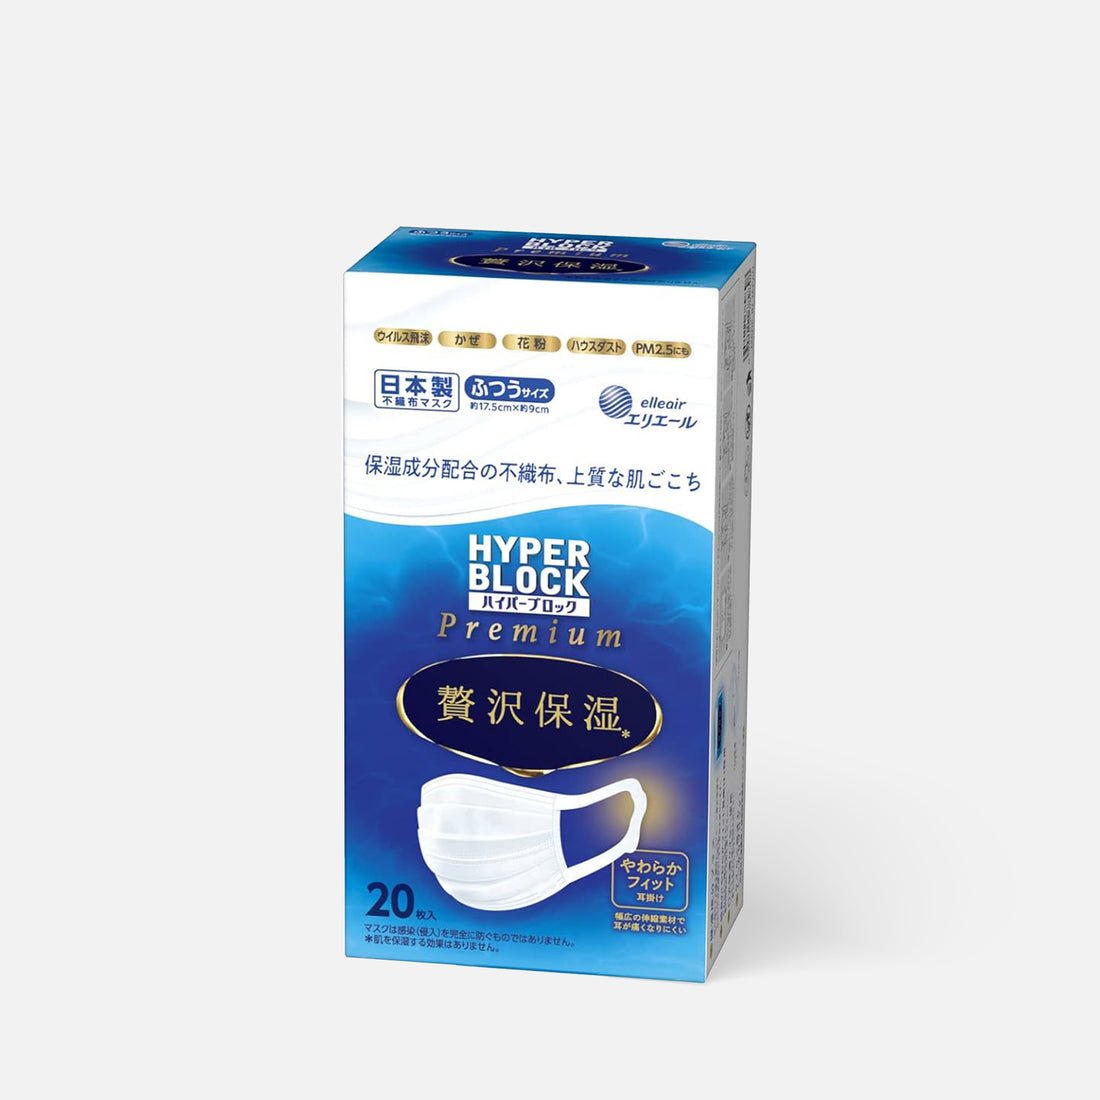 Elleair Hyper Block Mask Premium Luxury Moisturizing Regular Size 20pcs